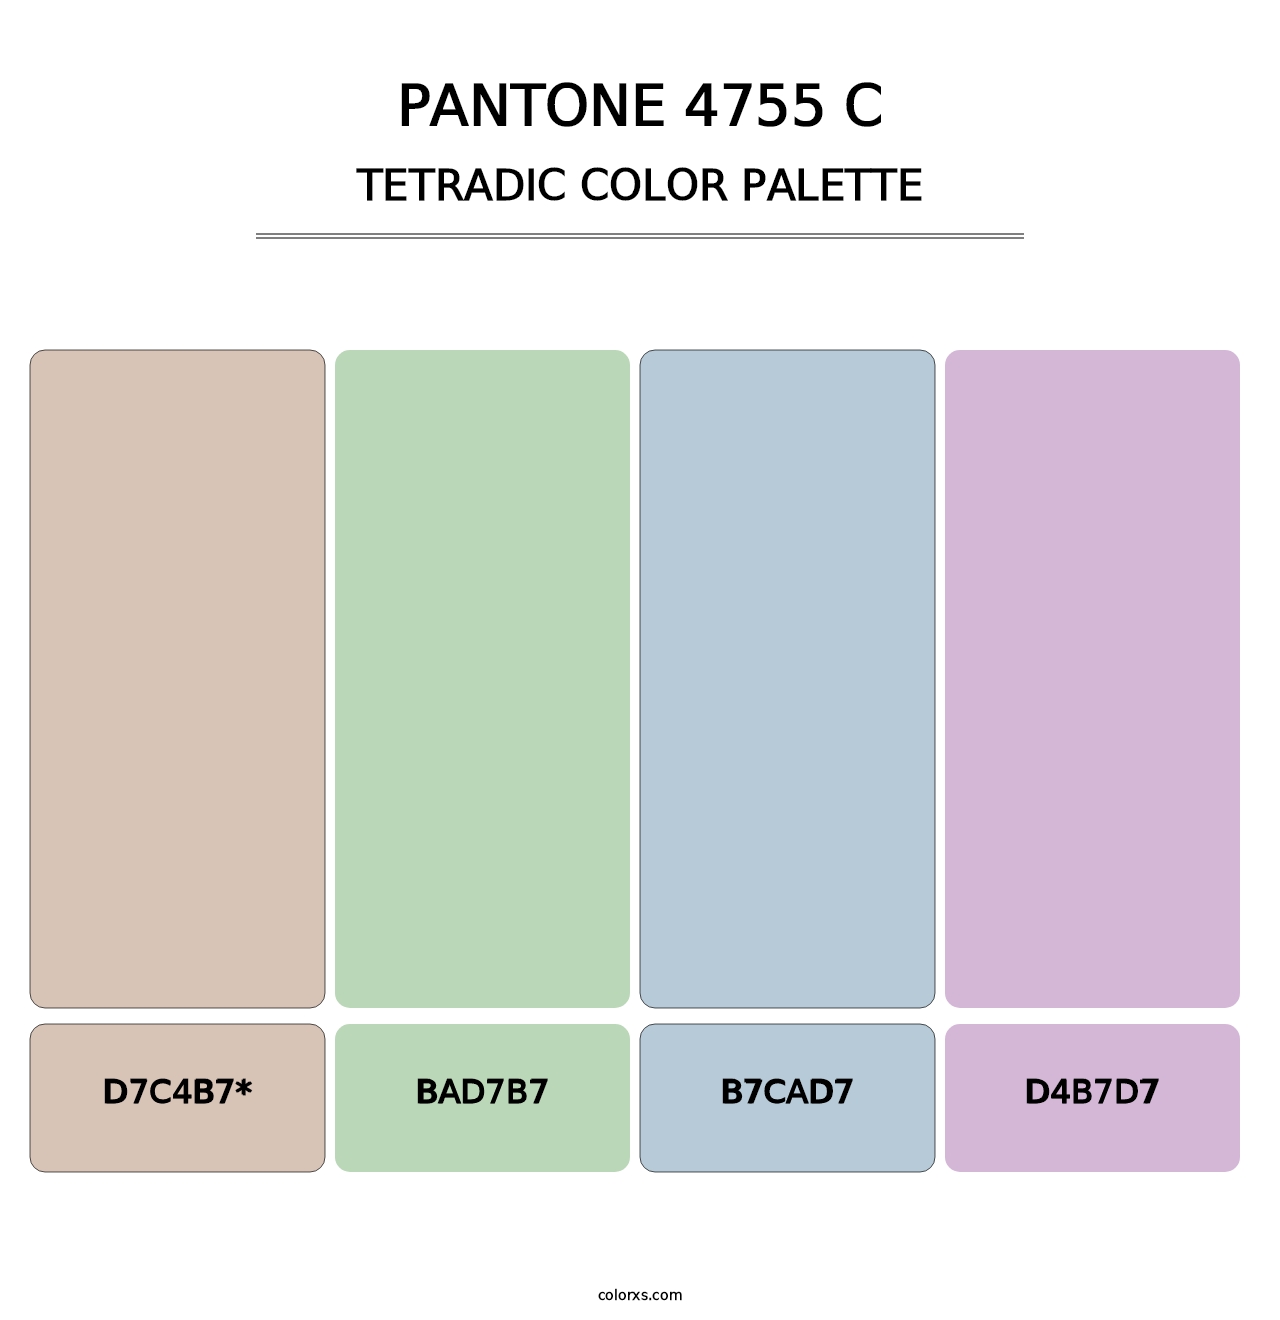 PANTONE 4755 C - Tetradic Color Palette